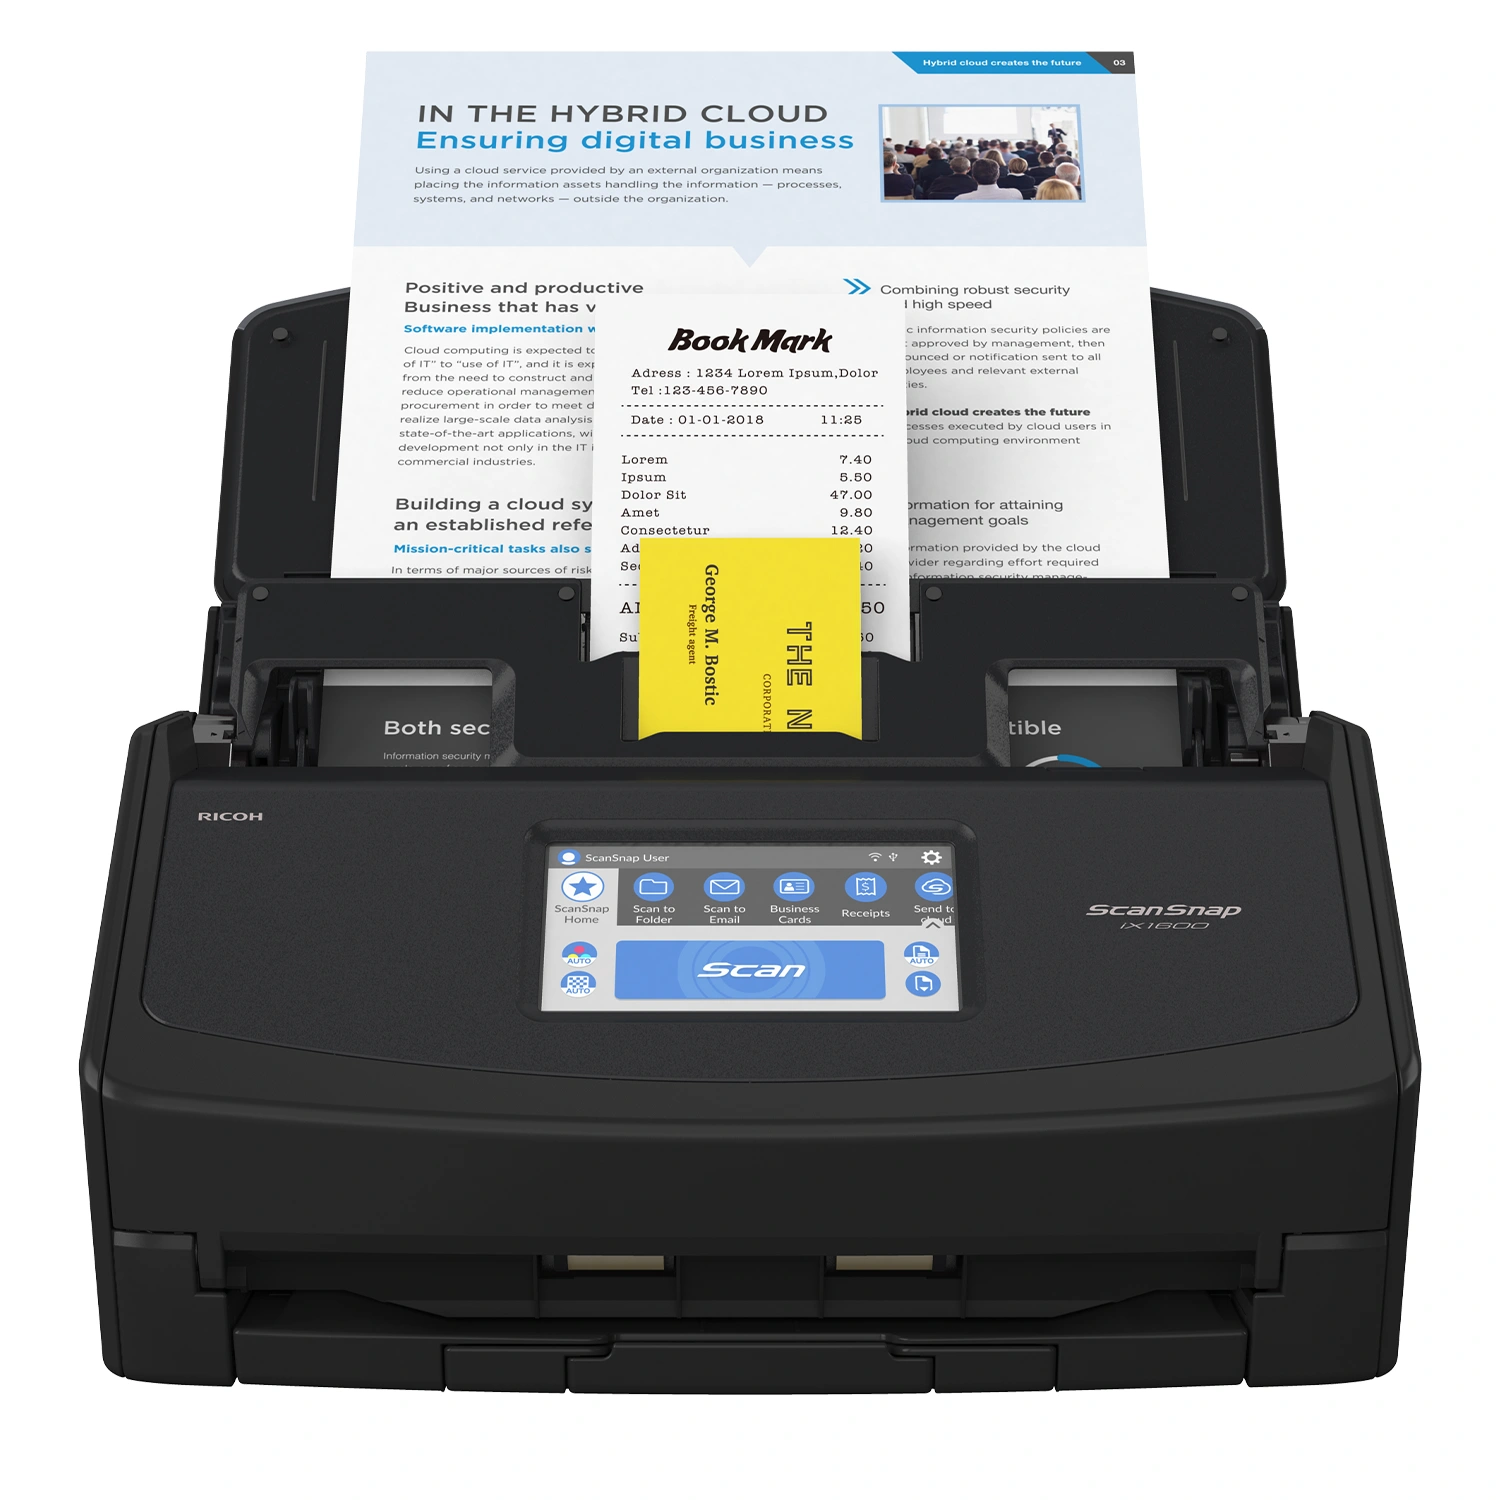 ScanSnap iX1600 black scanner